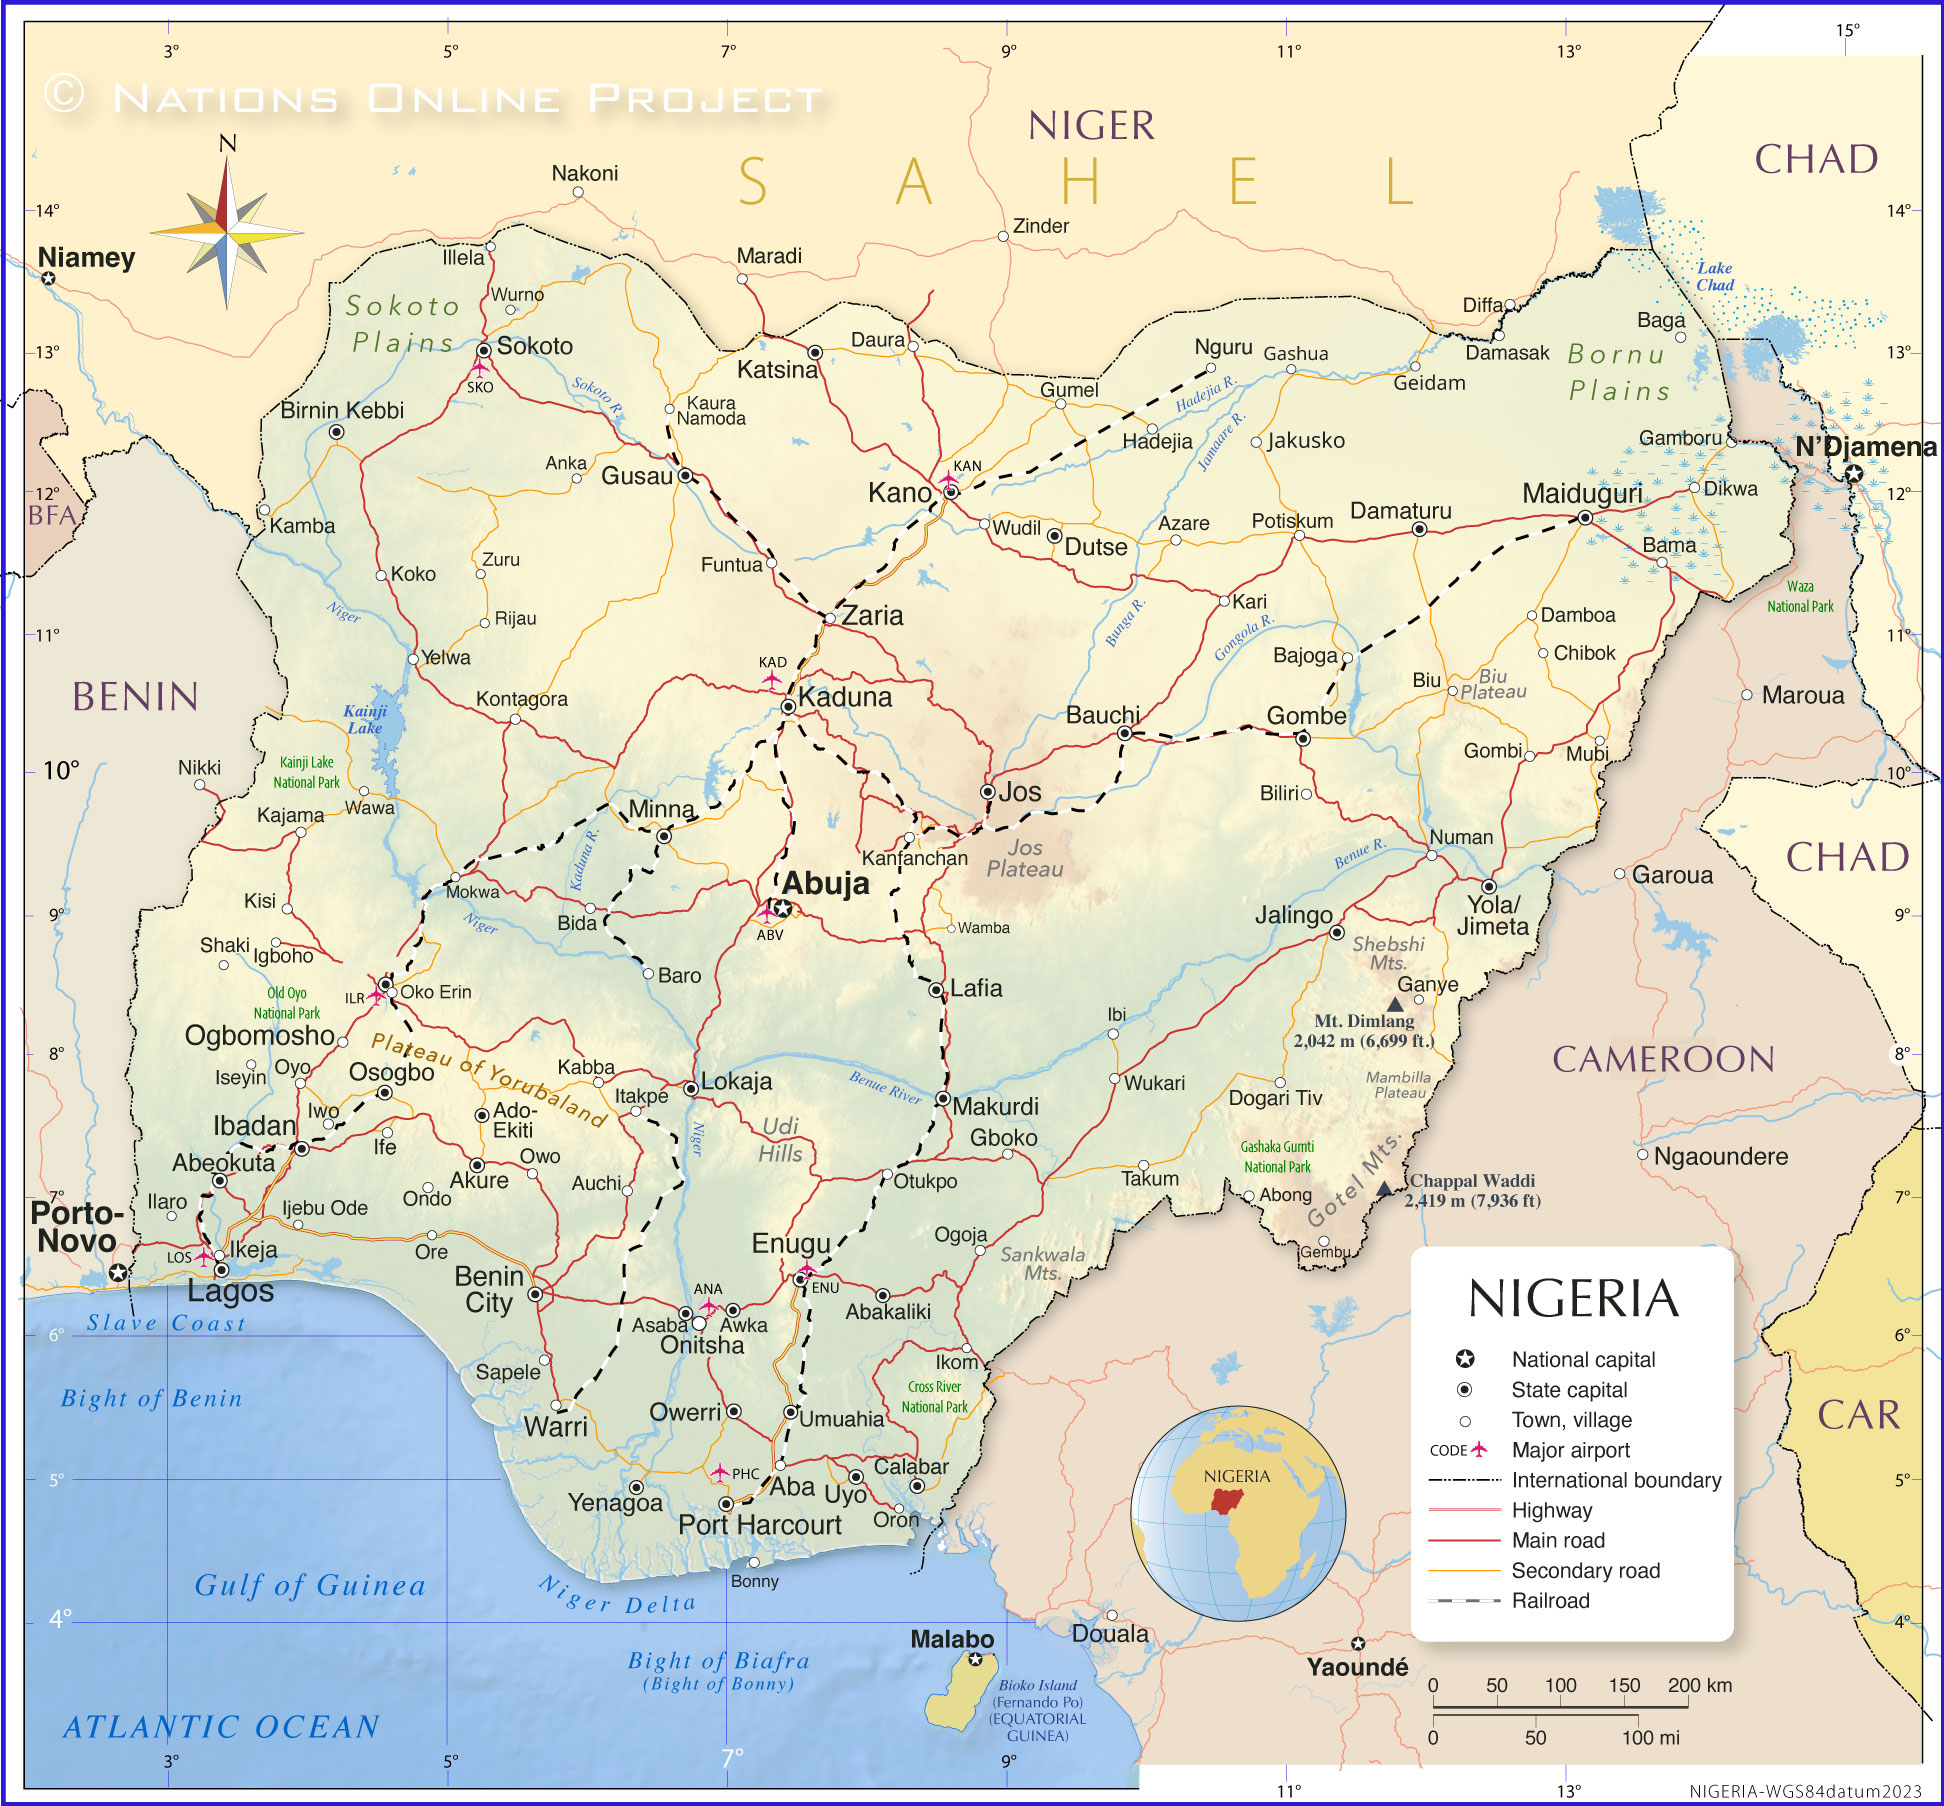 Political Map of Nigeria